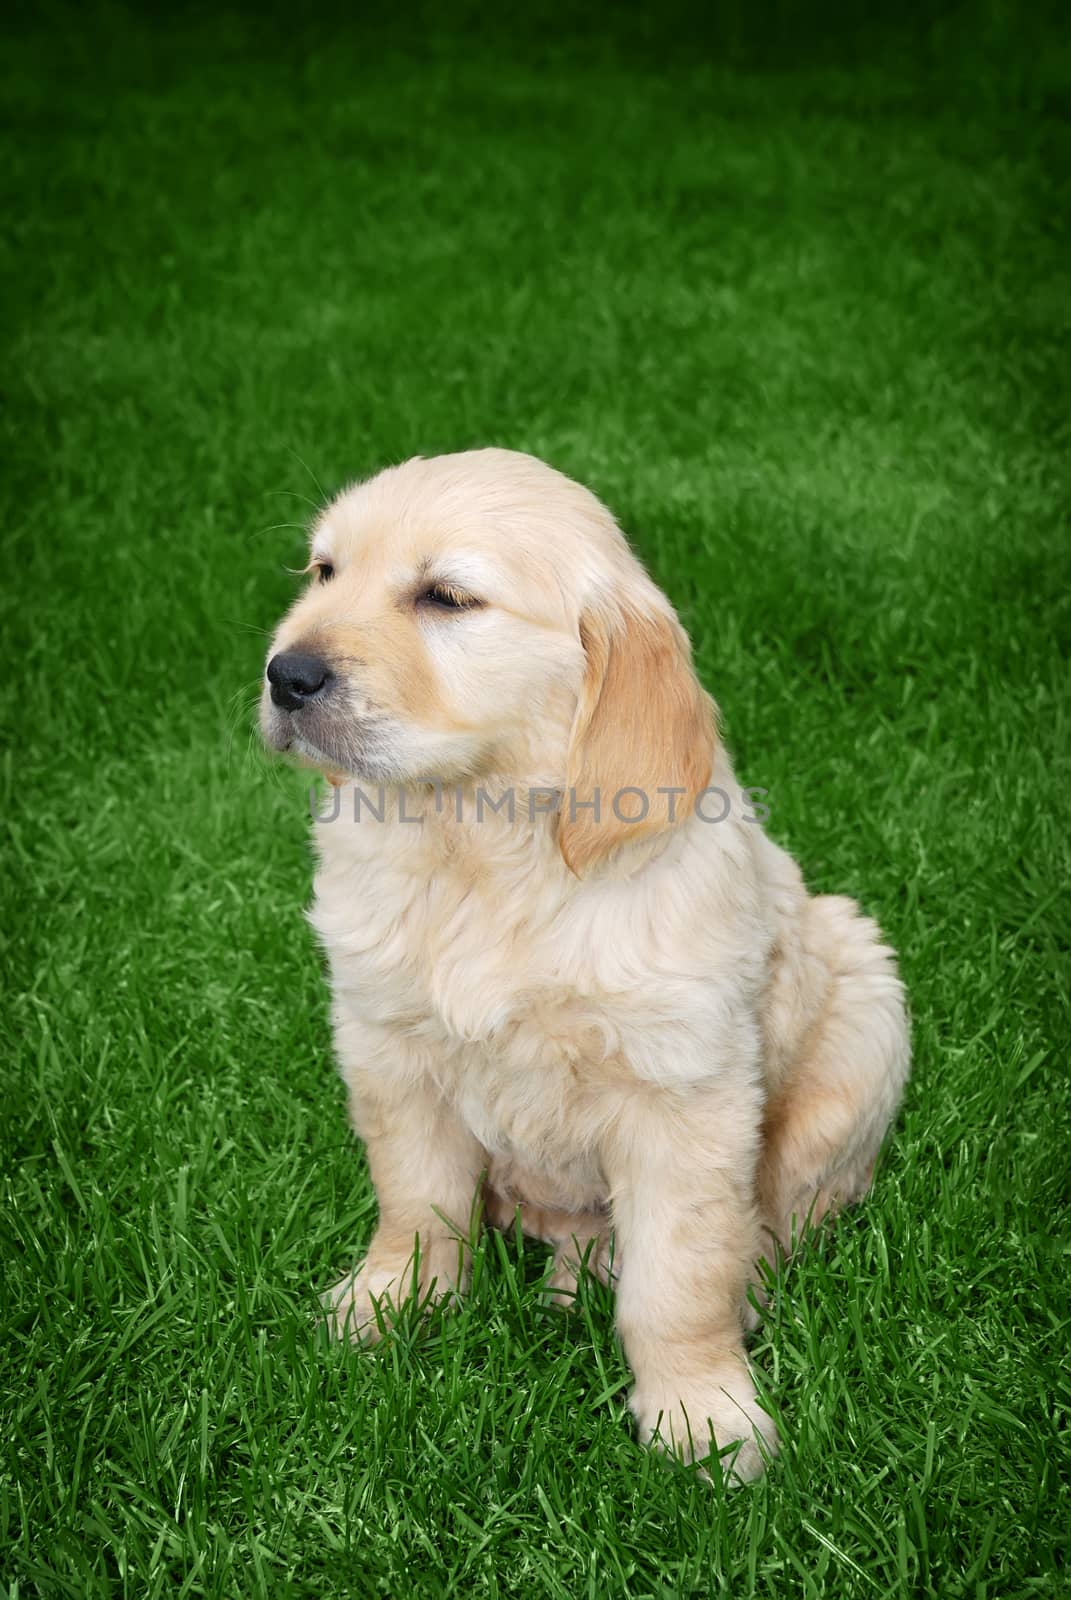 Cute golden retriever puppy sitting on the grass